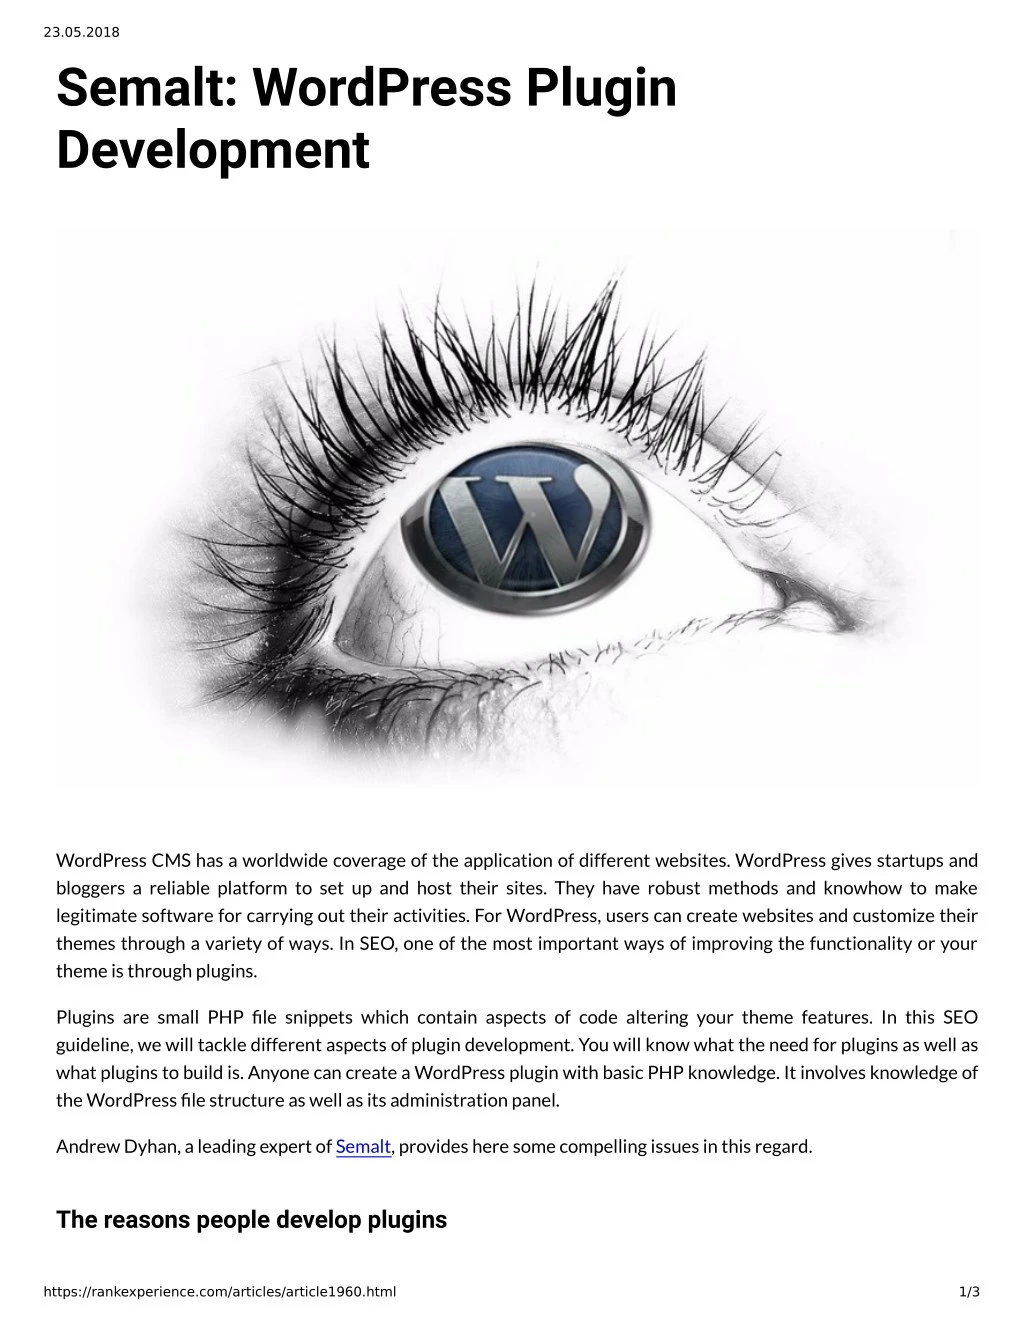 23 05 2018 semalt wordpress plugin development